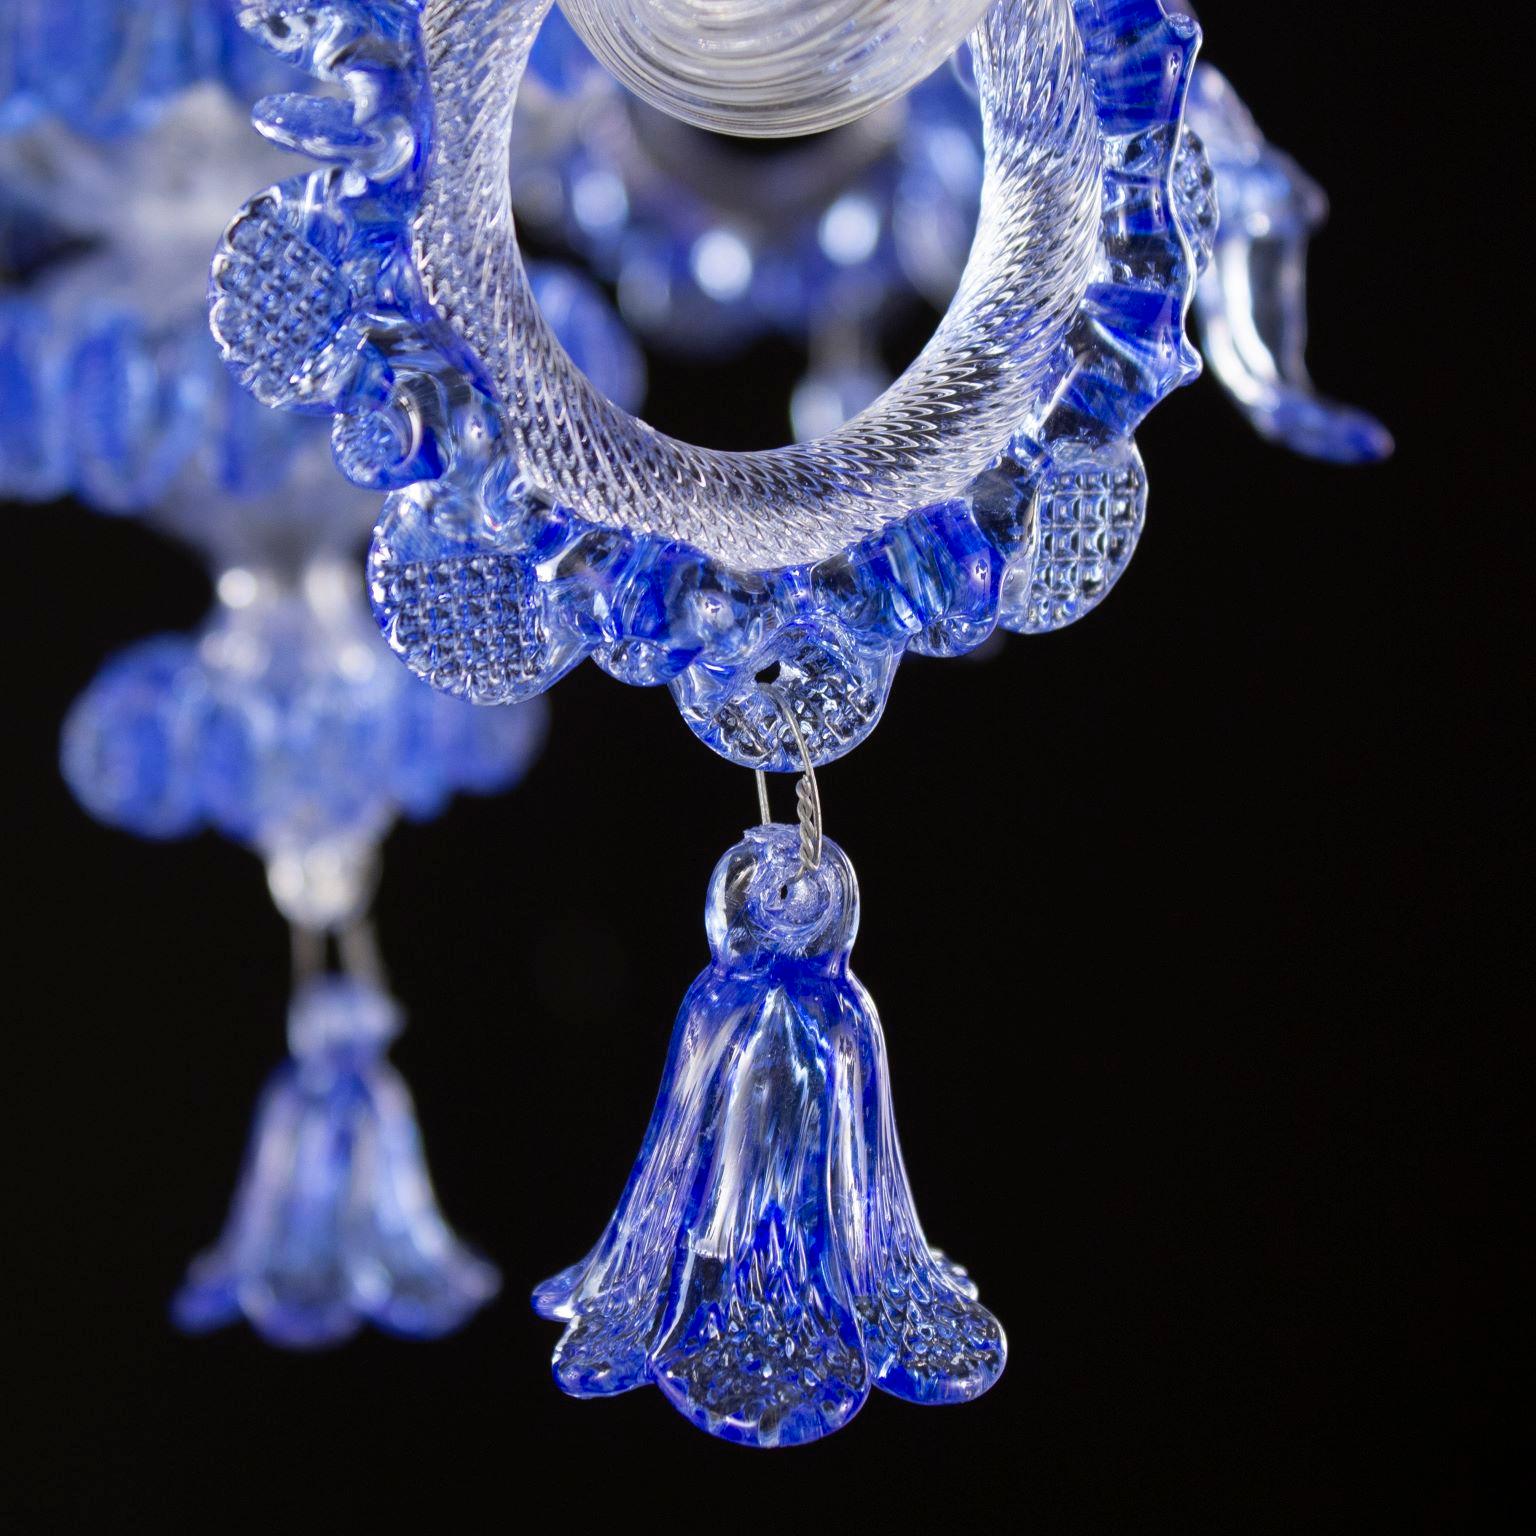 vintage murano glass chandelier